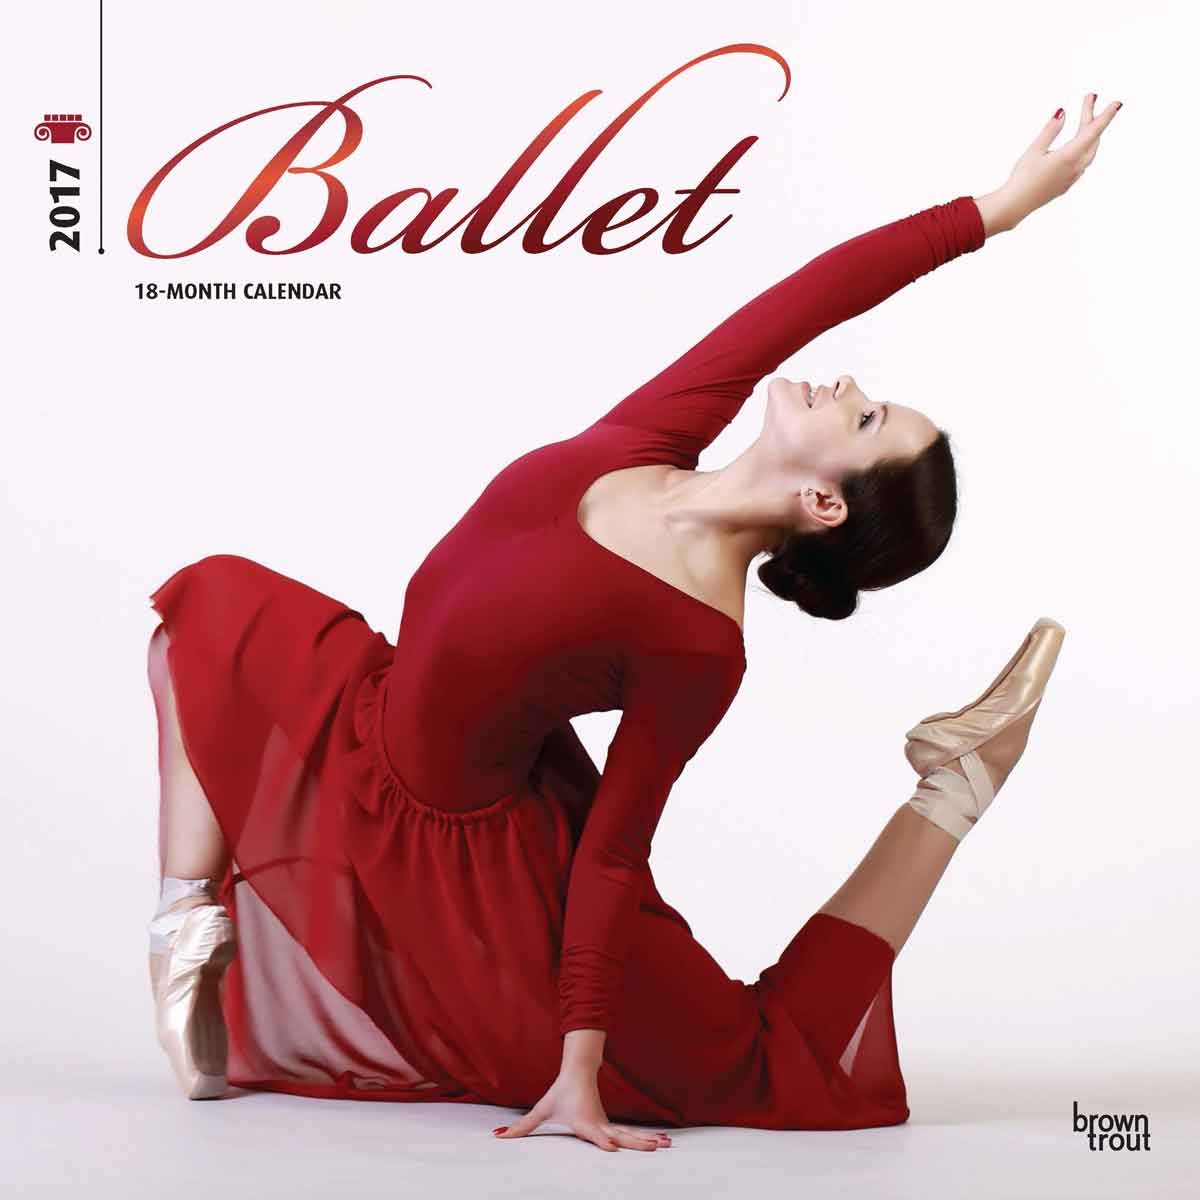 Ballet 2021 Calendar Foil Stamped Cover Buy online here Online watch